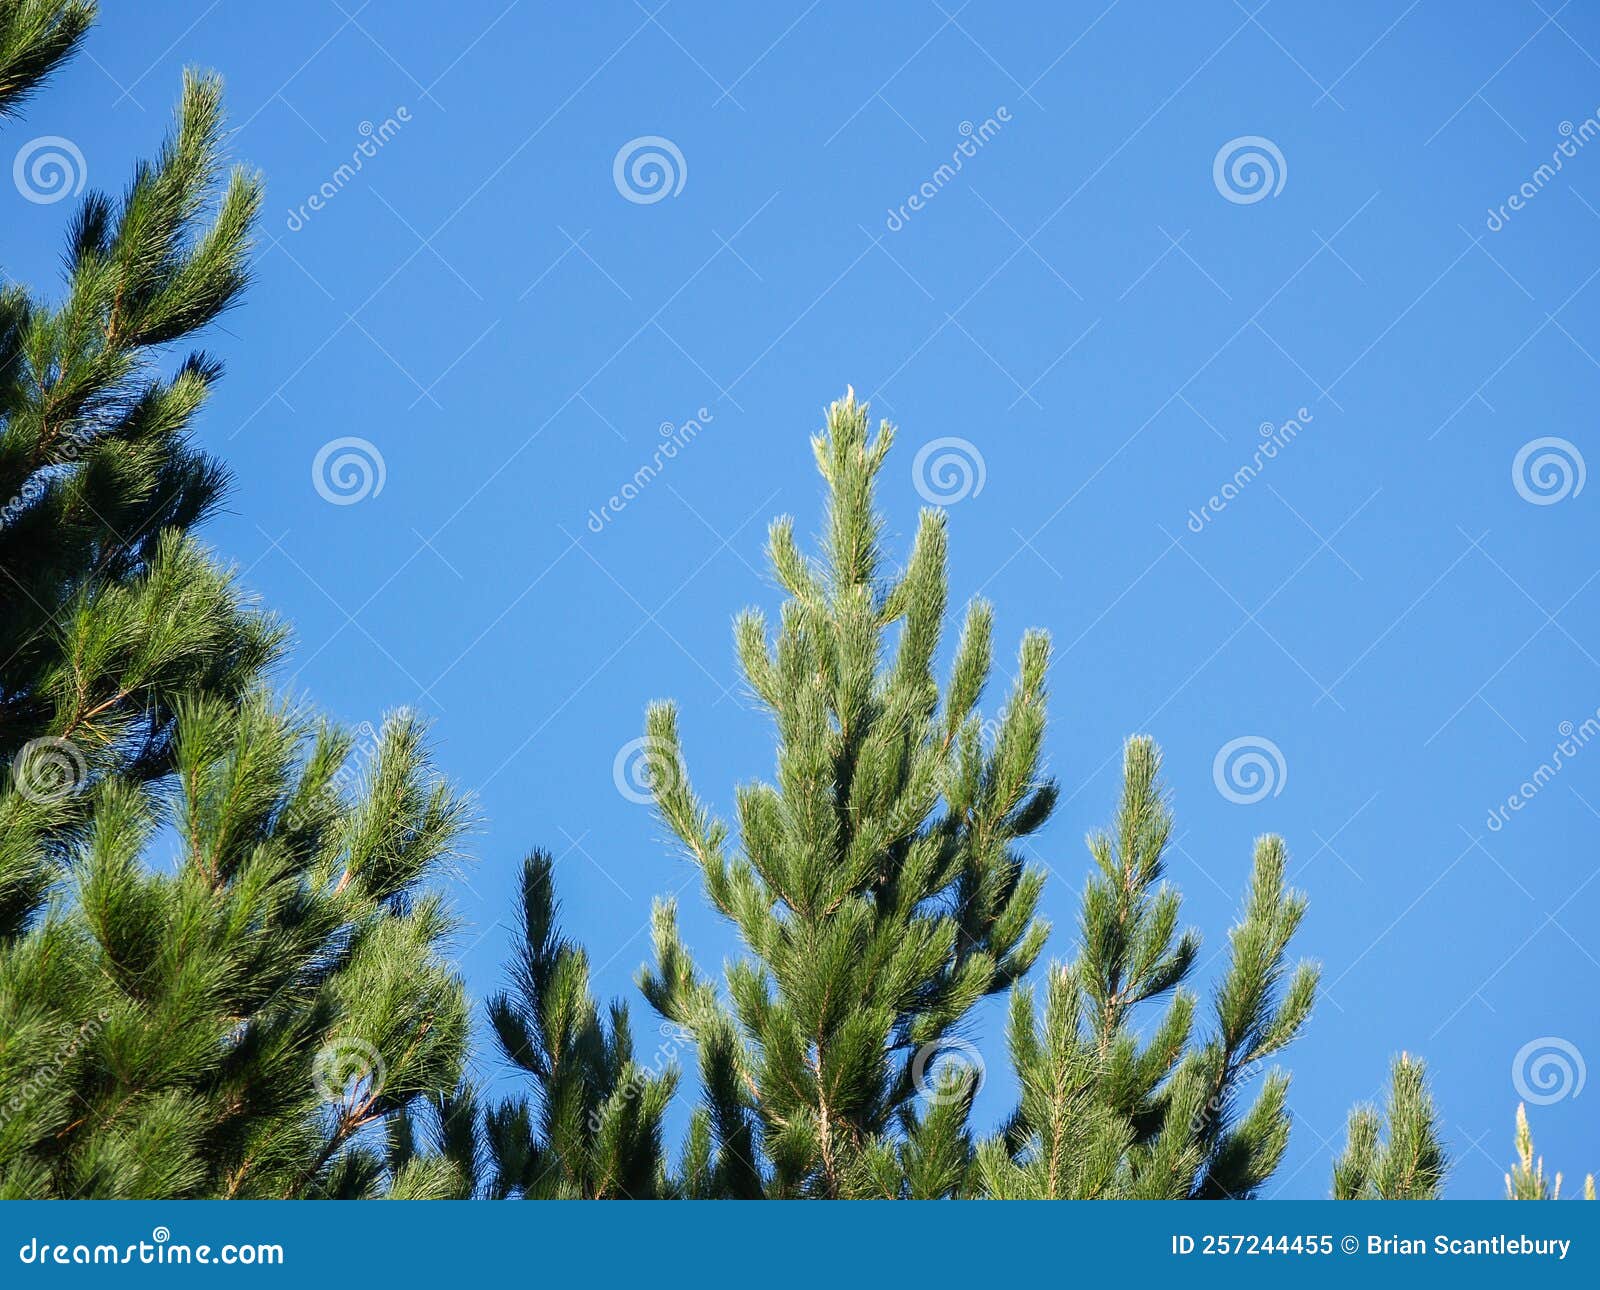 pine trees growing against blue sky